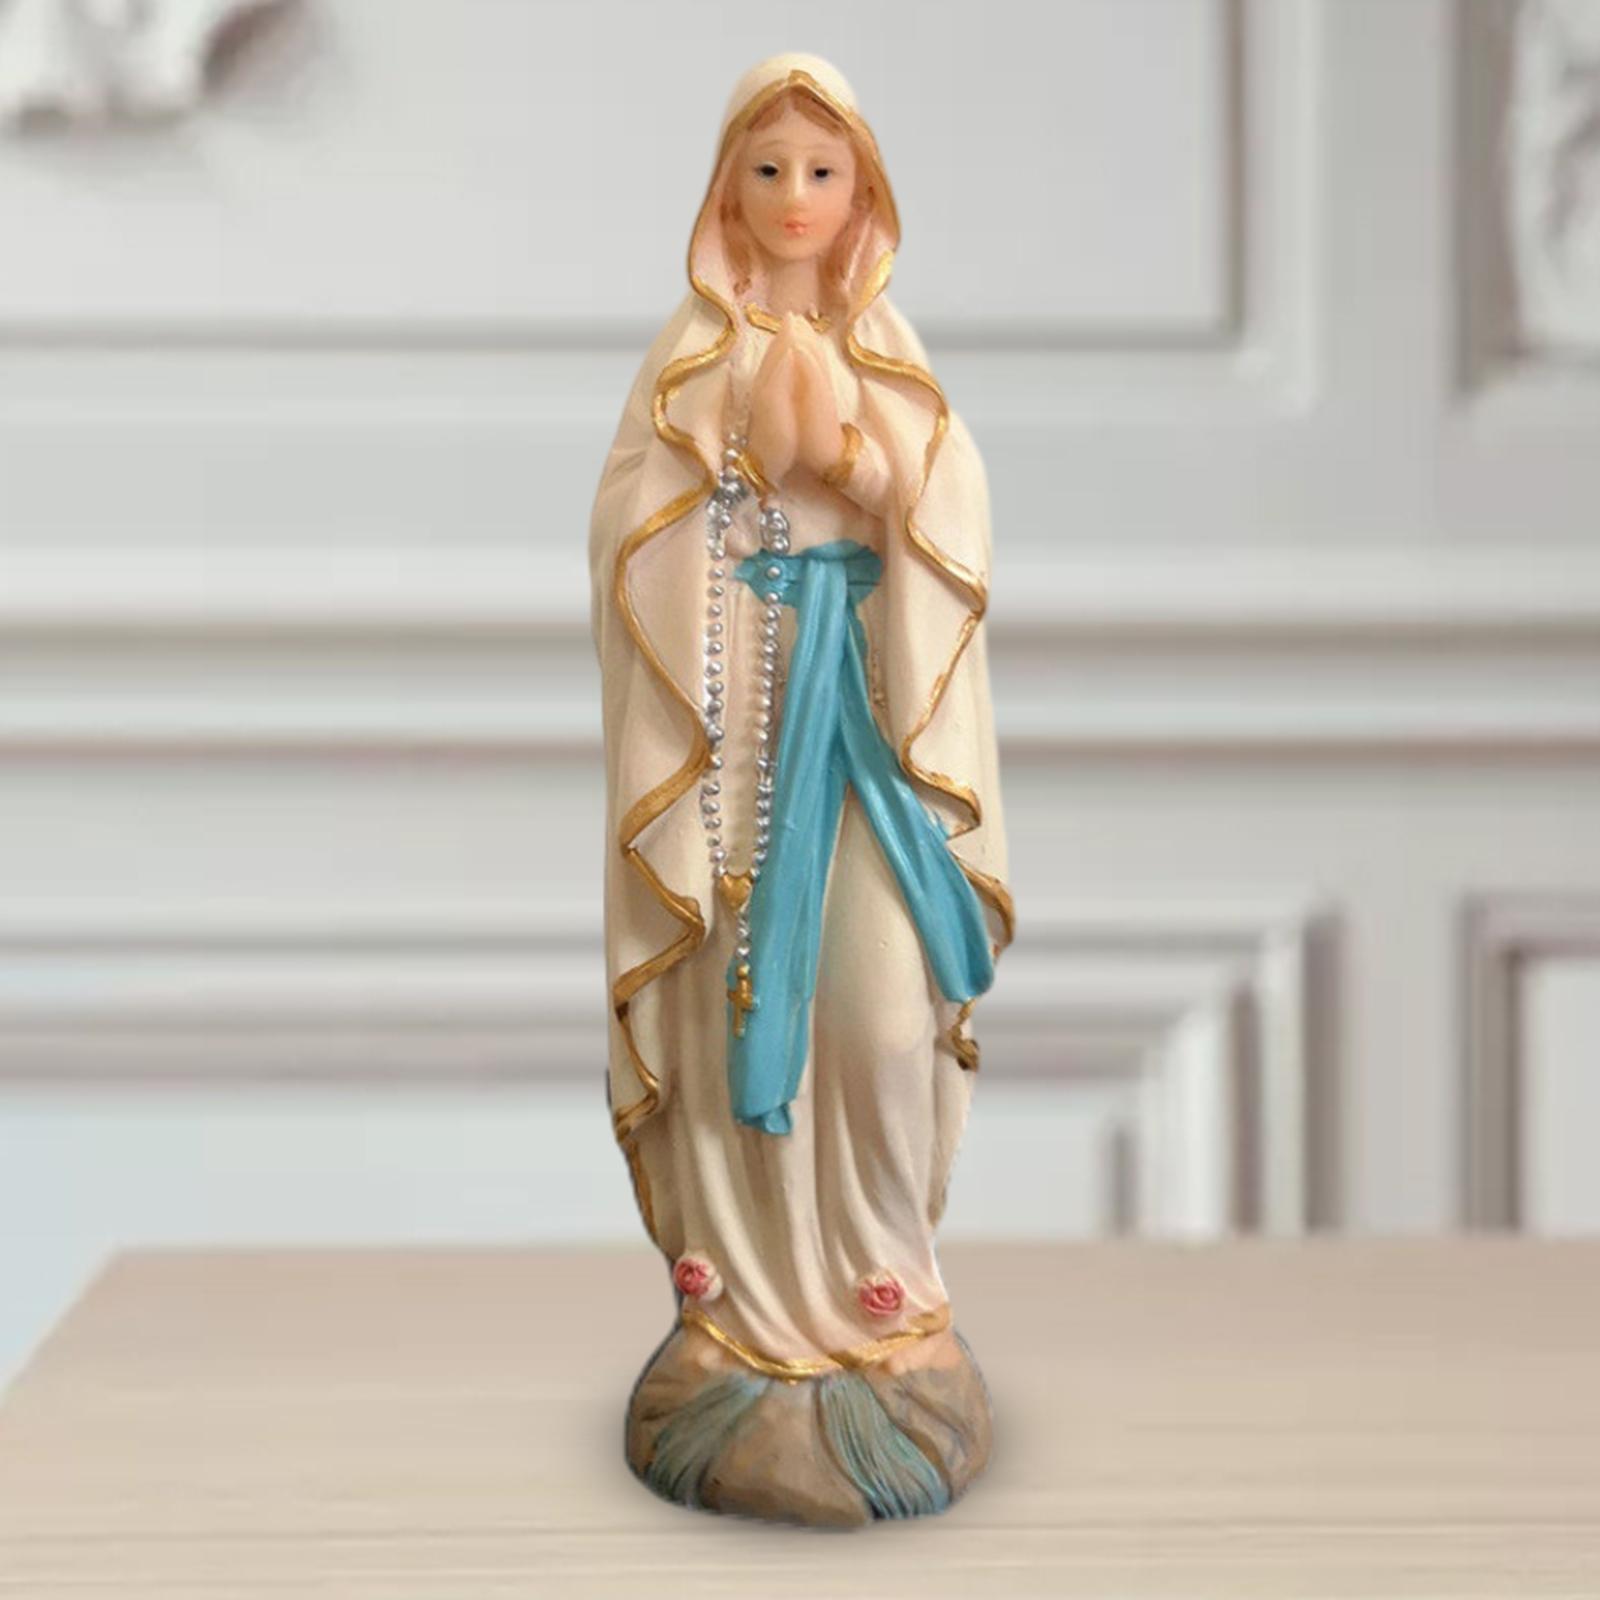 Mary Statue Crafts Decorative Religious Sculpture for Shelf Desk Home